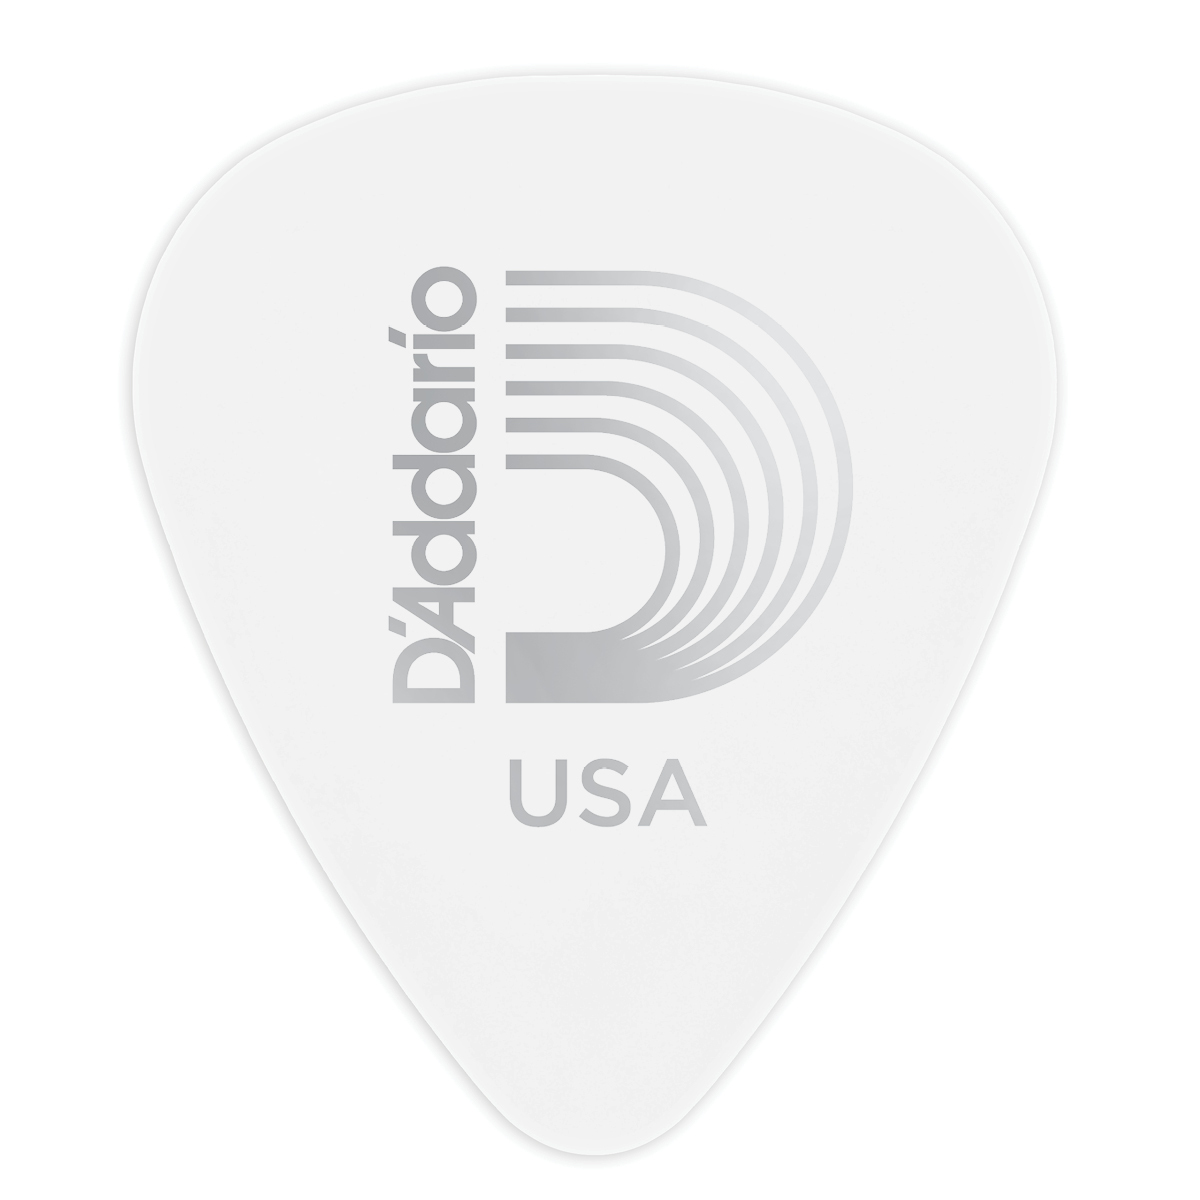 D'Addario White-Color Celluloid Guitar Pick, Medium